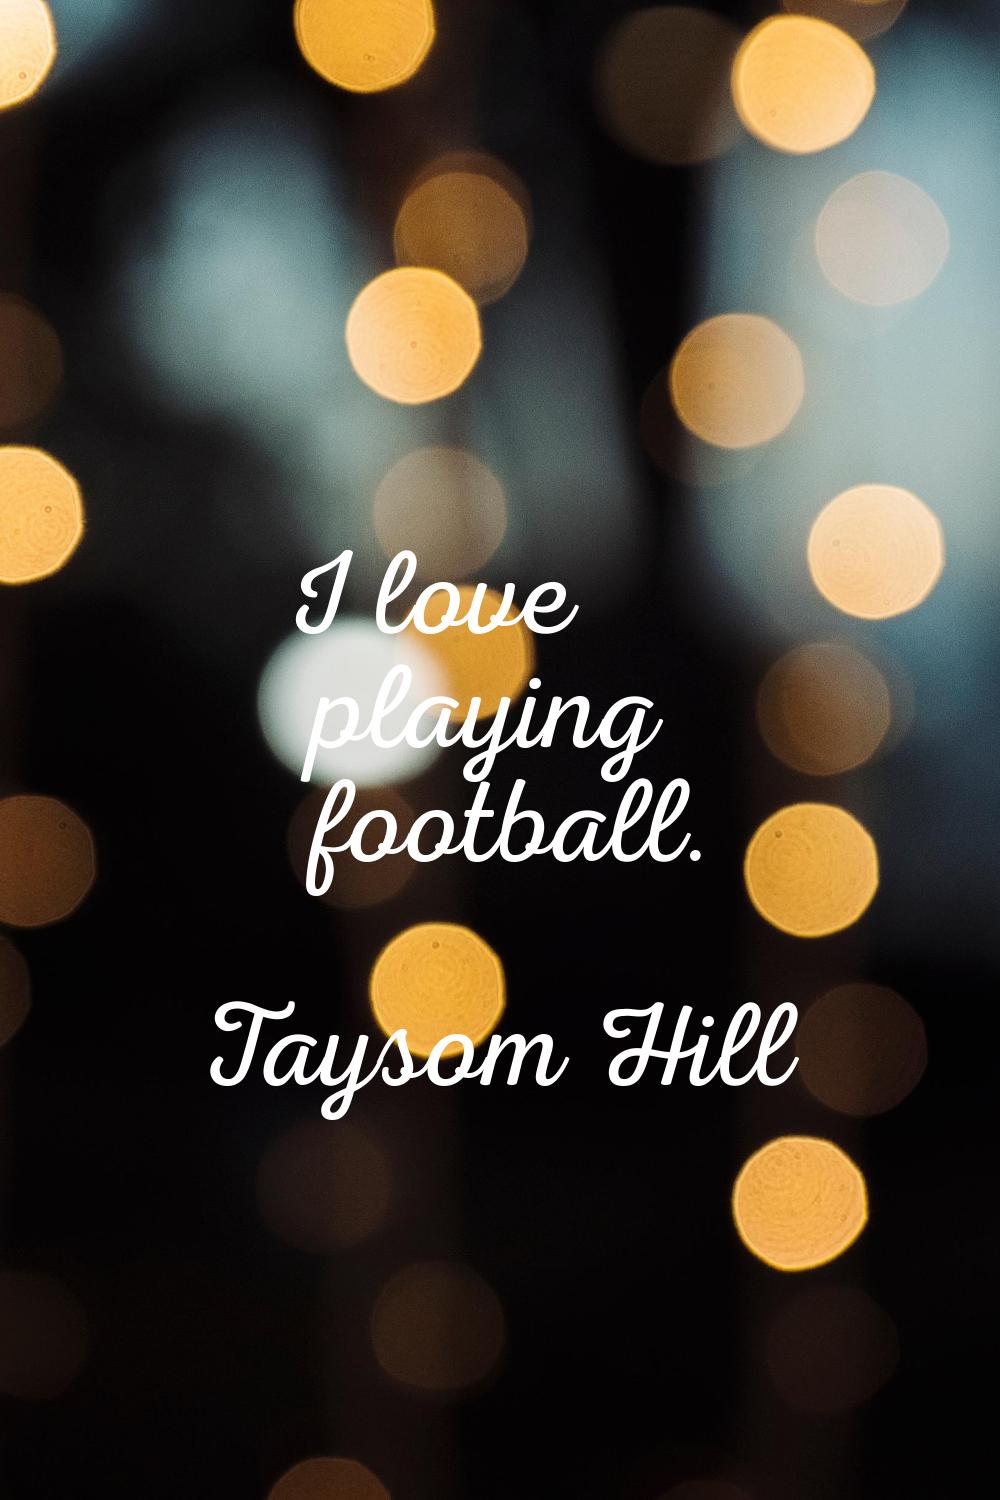 I love playing football.